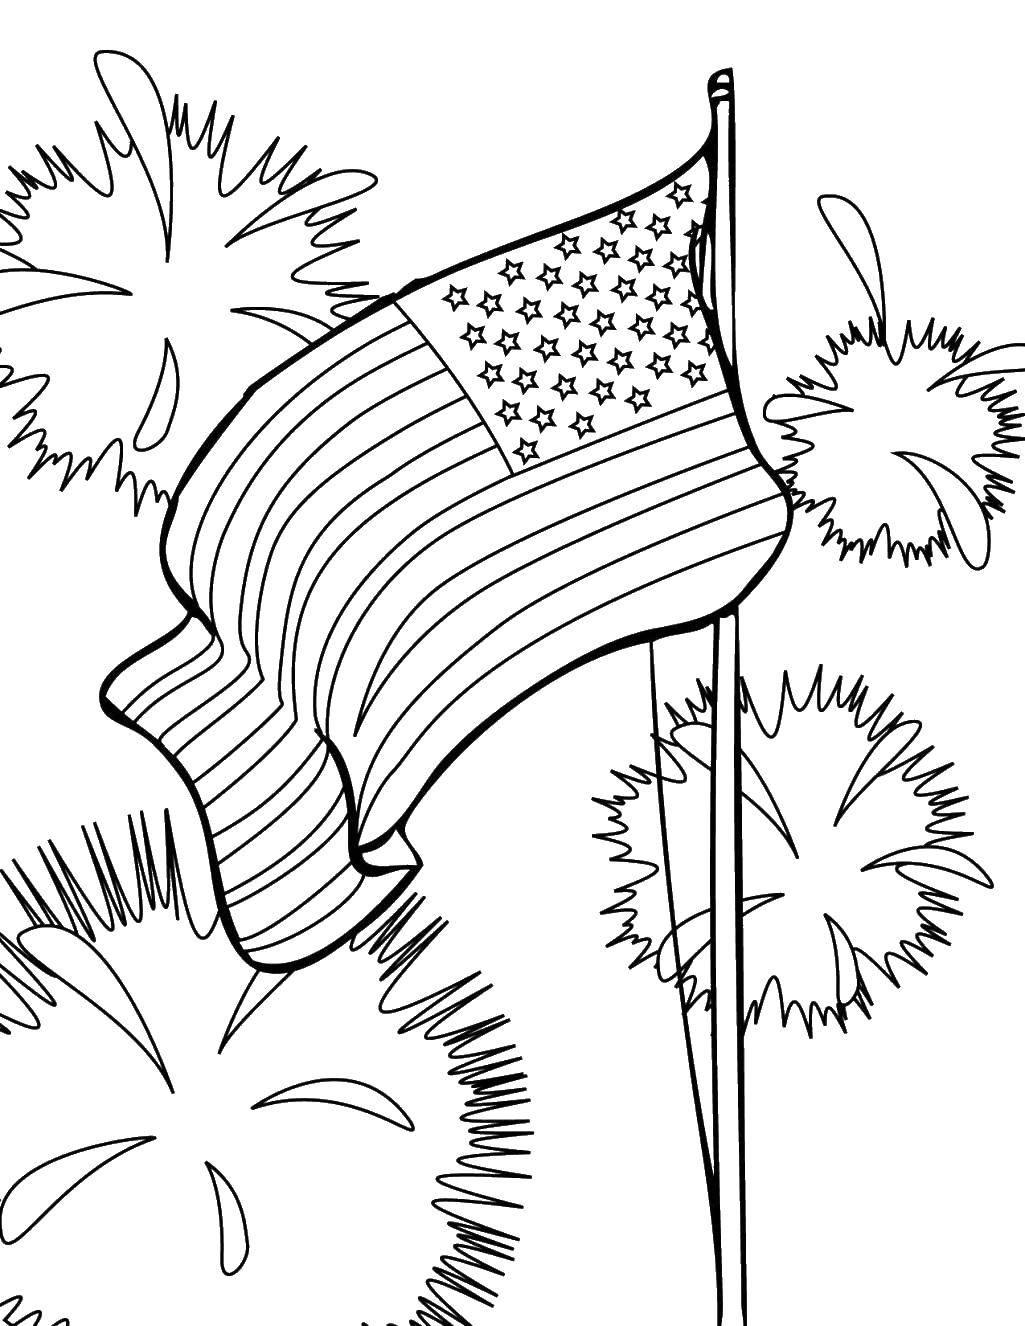 Coloring USA flag. Category USA . Tags:  USA, America, flag, fireworks.